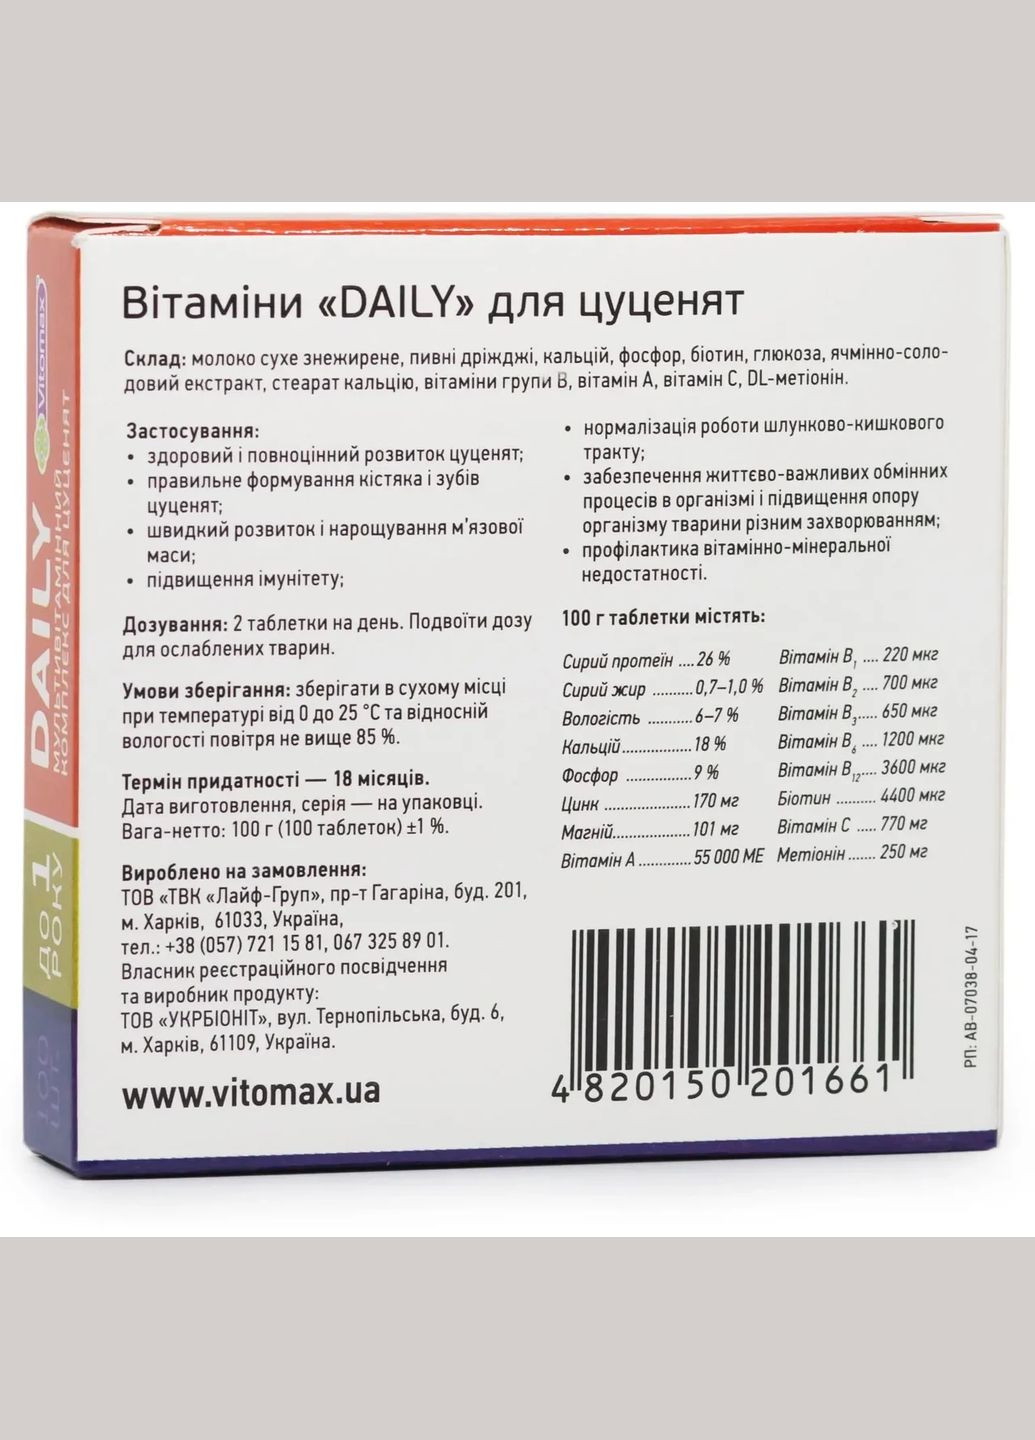 Daily Мультивитаминный комплекс для щенков, 100 таблеток, 100 г, 201661 Vitomax (278308836)